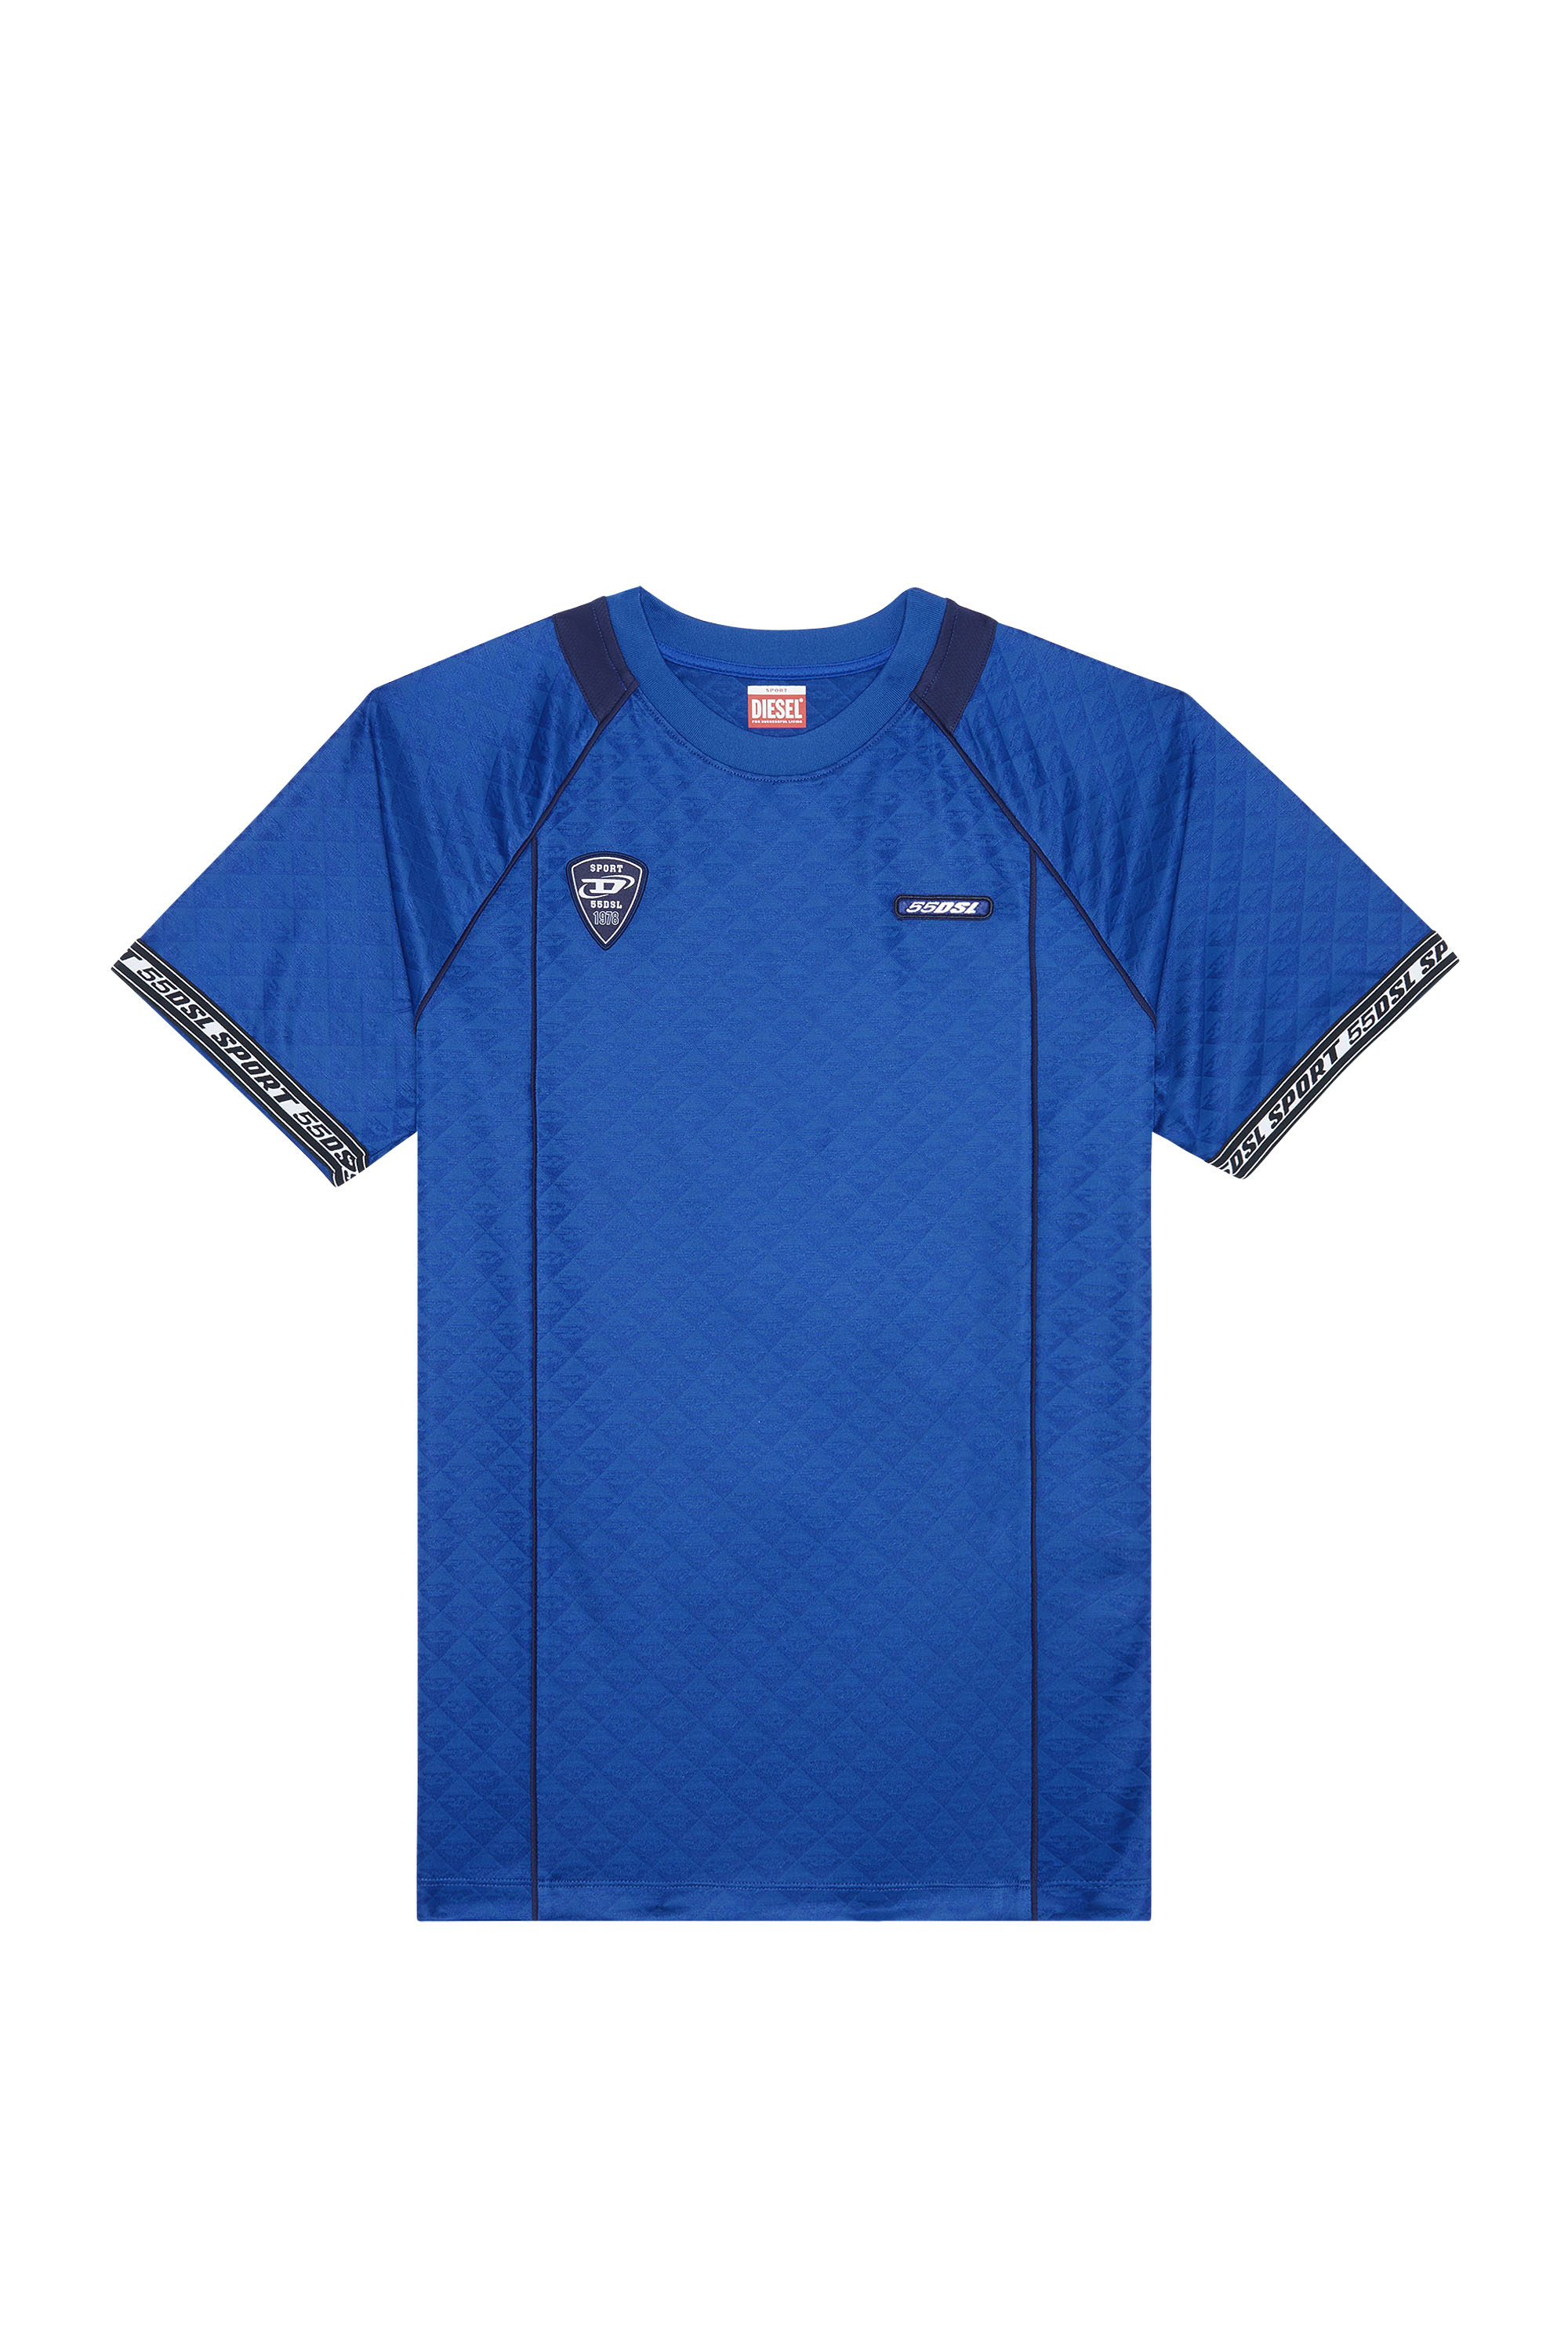 AMTEE-OZYNER-WT11, Blue - T-Shirts